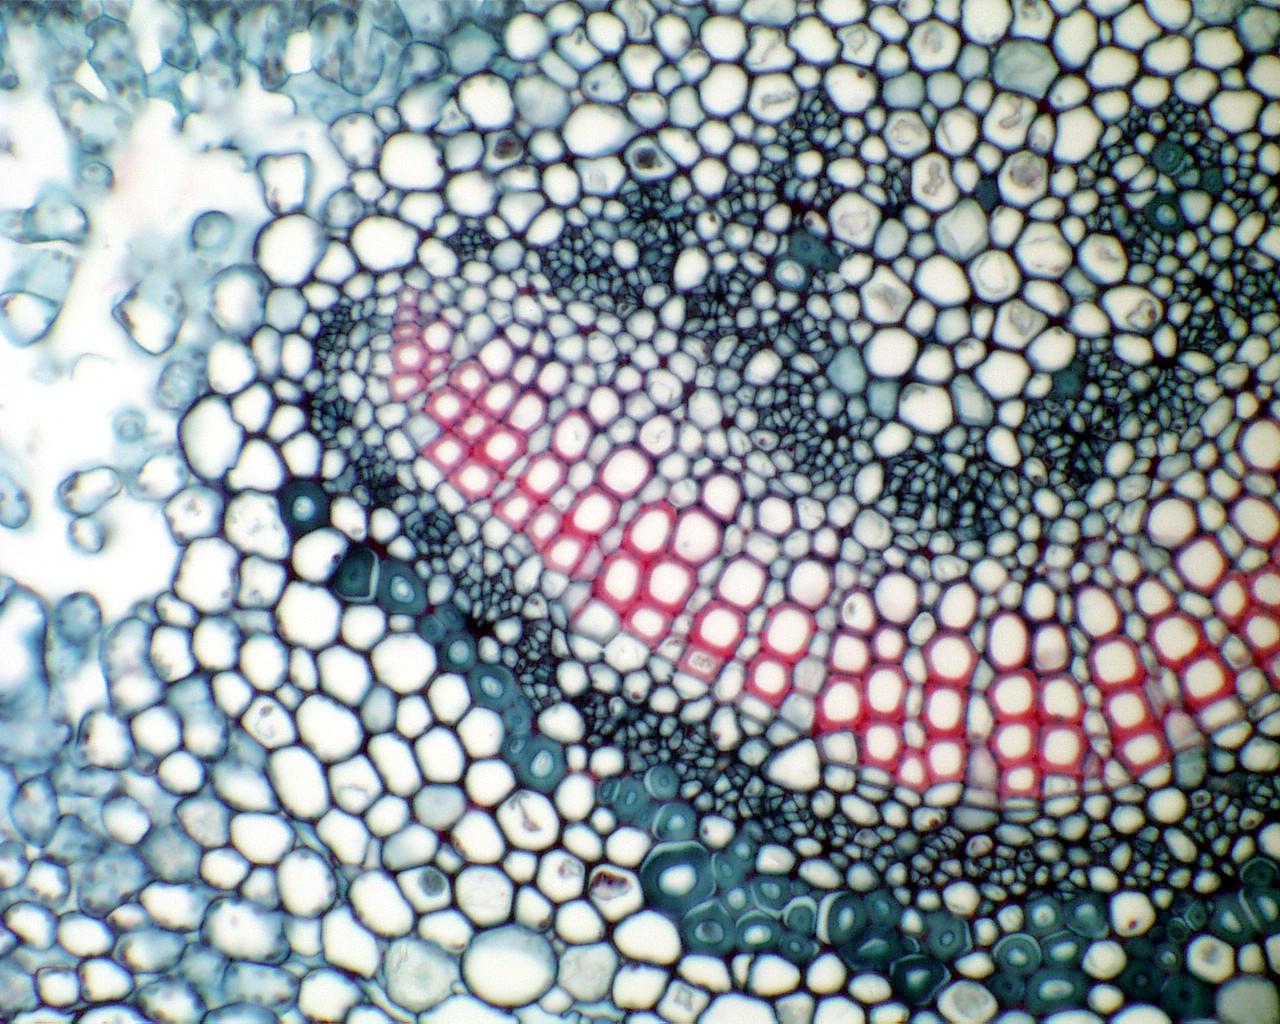 nerium oleander cross section